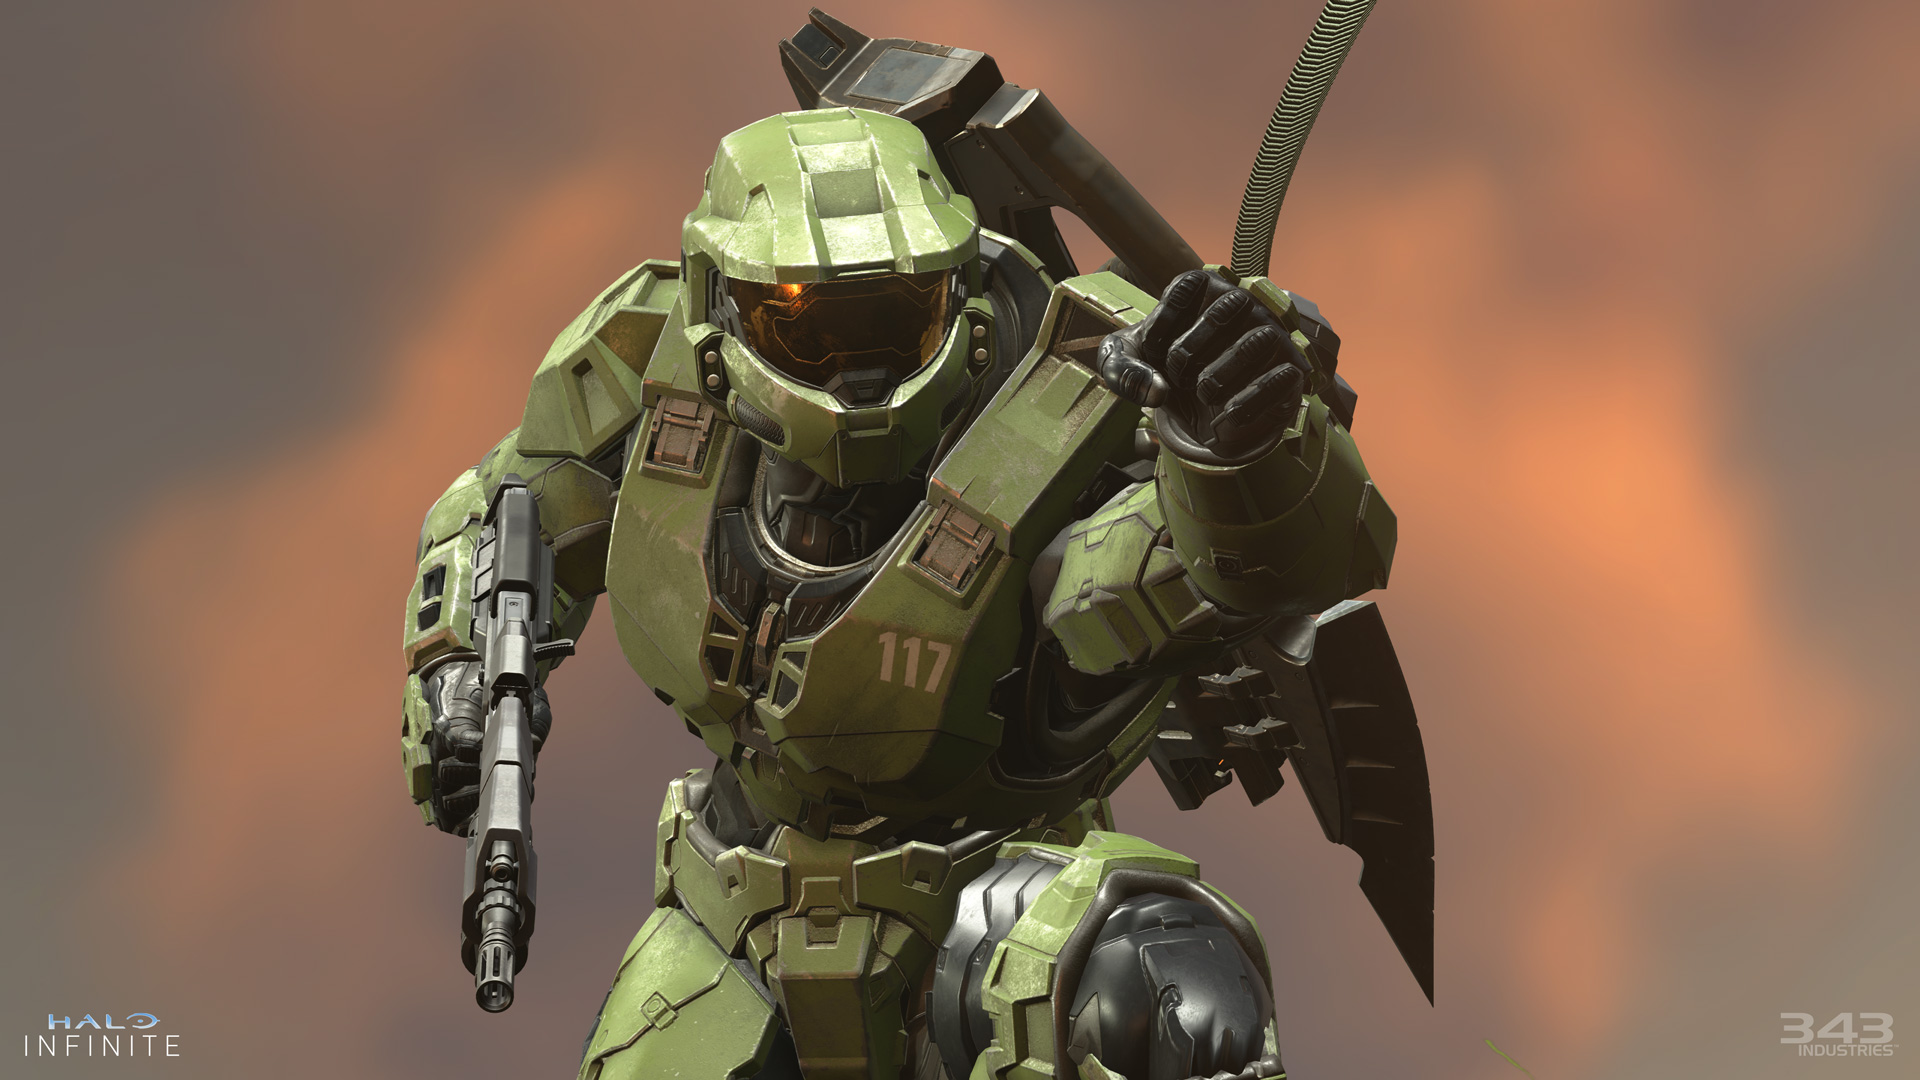 Halo Infinite screenshot showing armored character